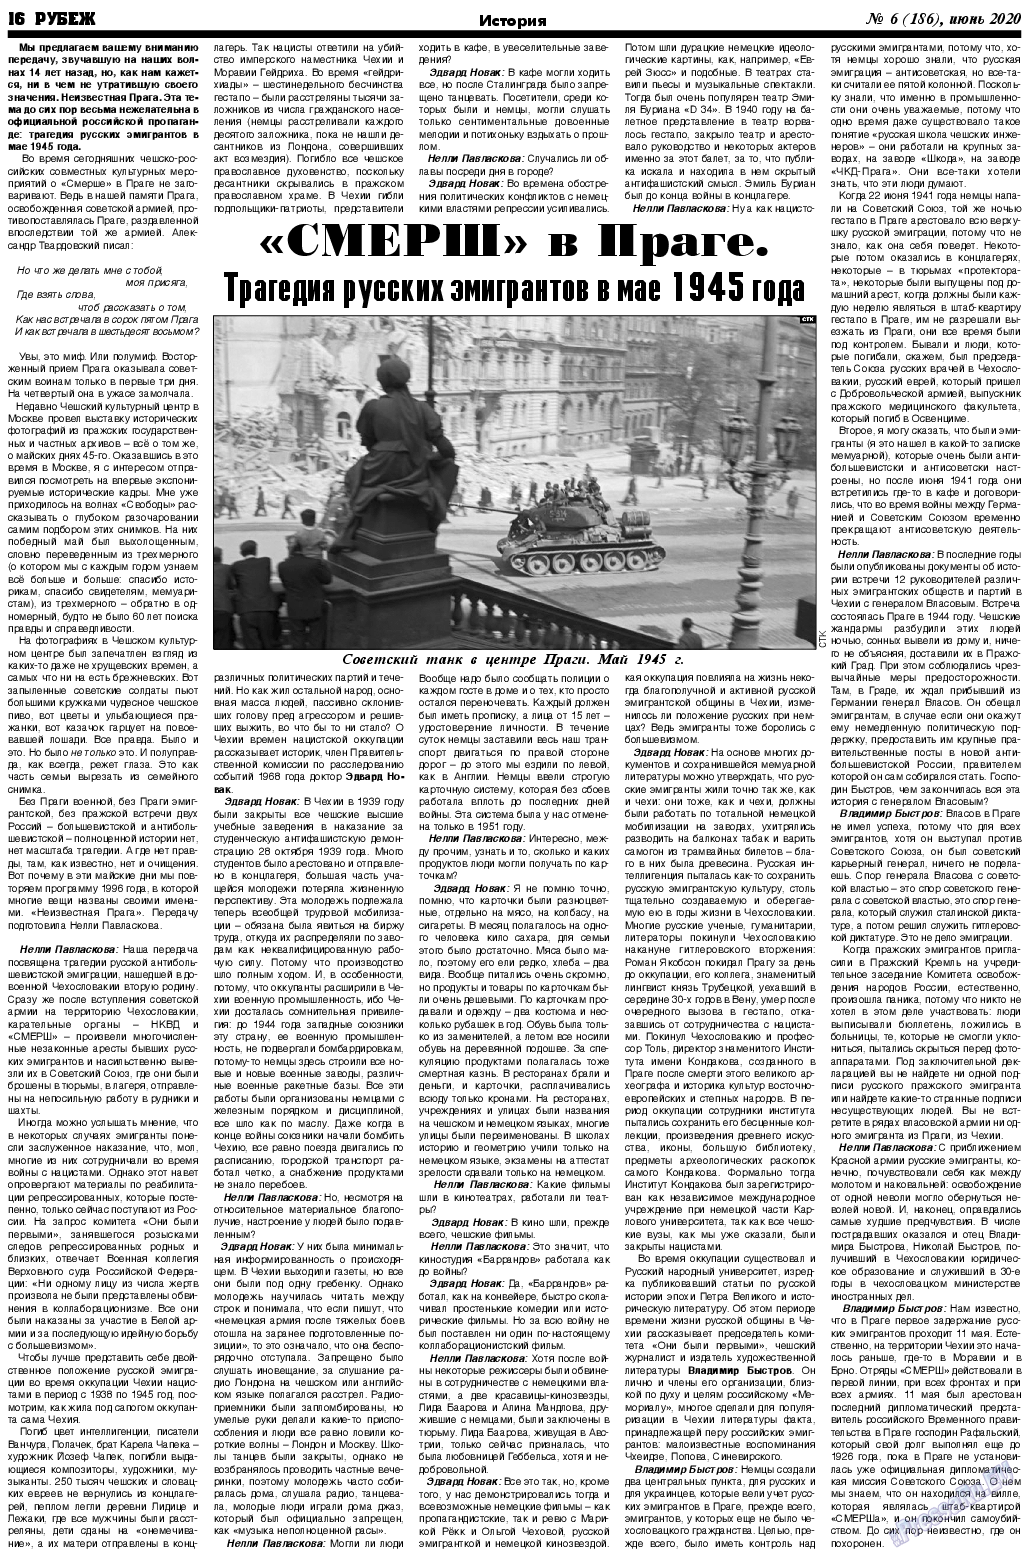 Рубеж, газета. 2020 №6 стр.16